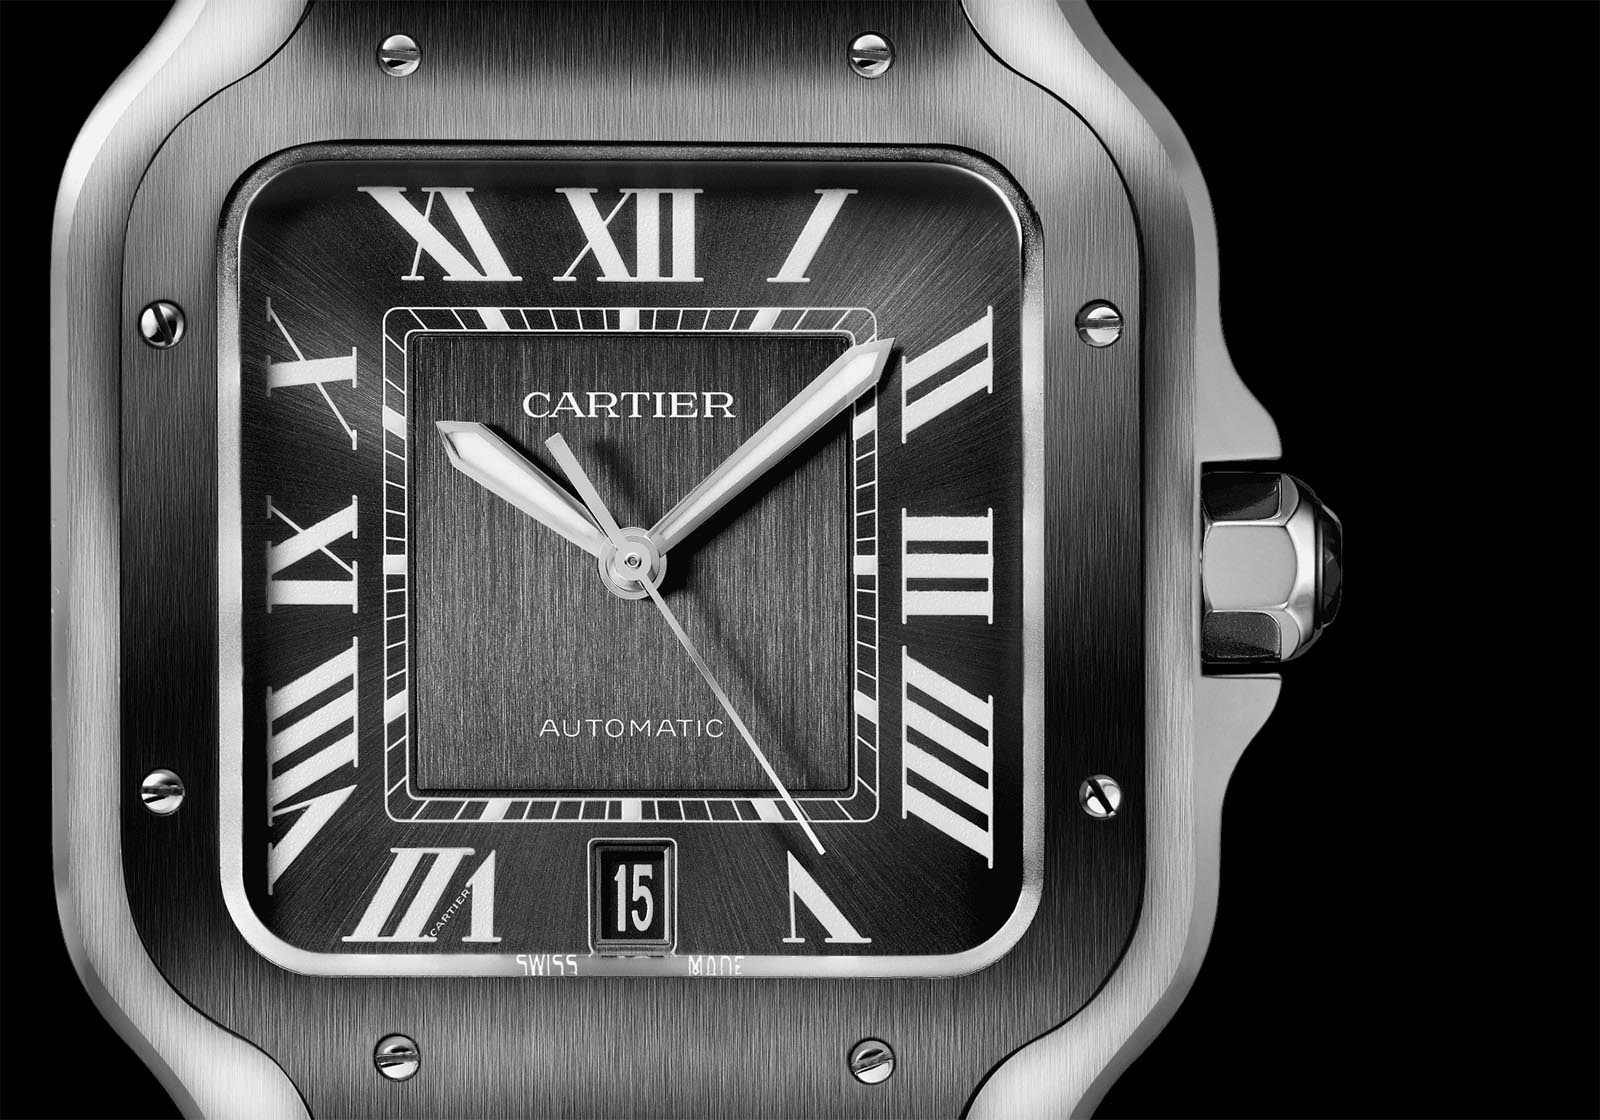 Santos de Cartier ADLC | SJX Watches